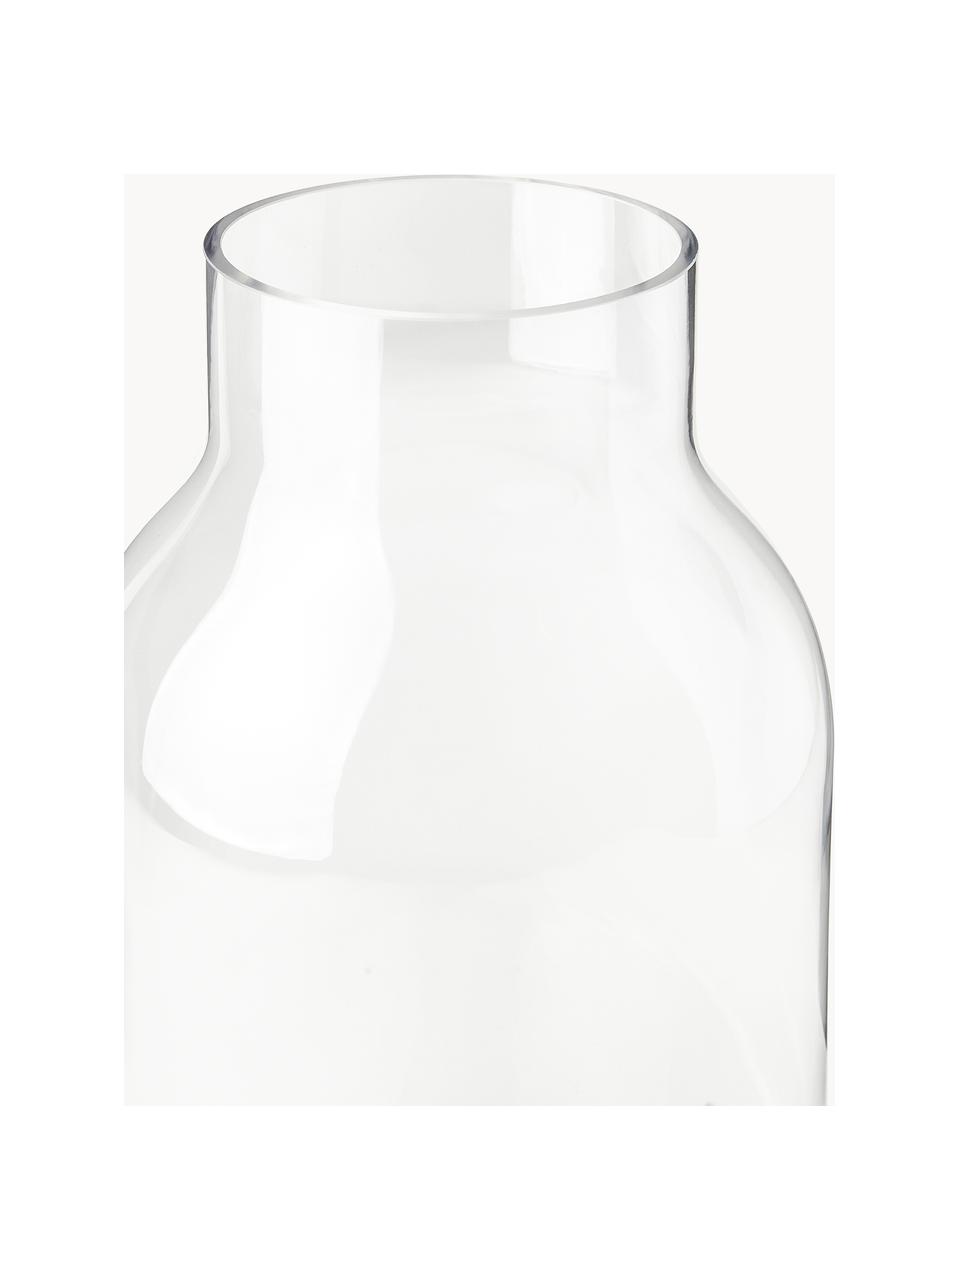 Vaso in vetro Loren, Vetro, Trasparente, Ø 26 x Alt. 45 cm